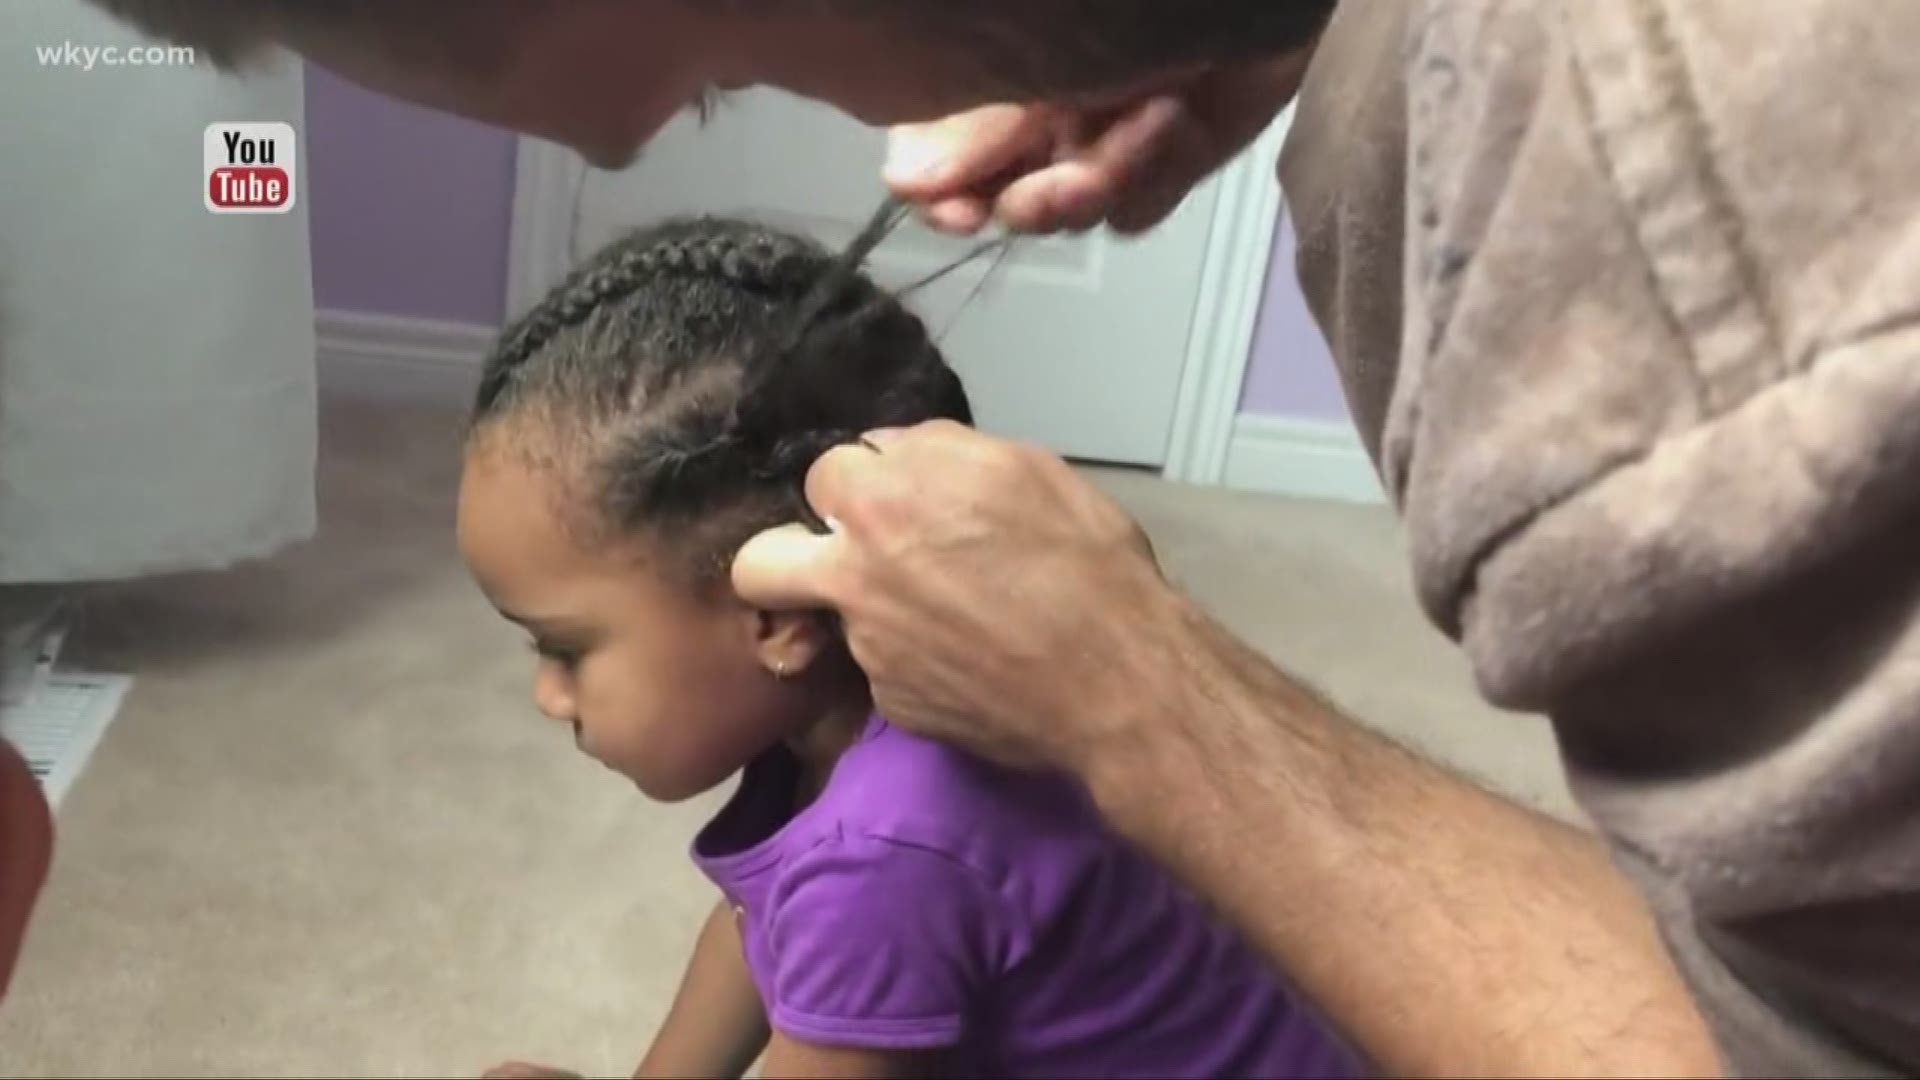 Local salon hosts class to teach dads how to do hair